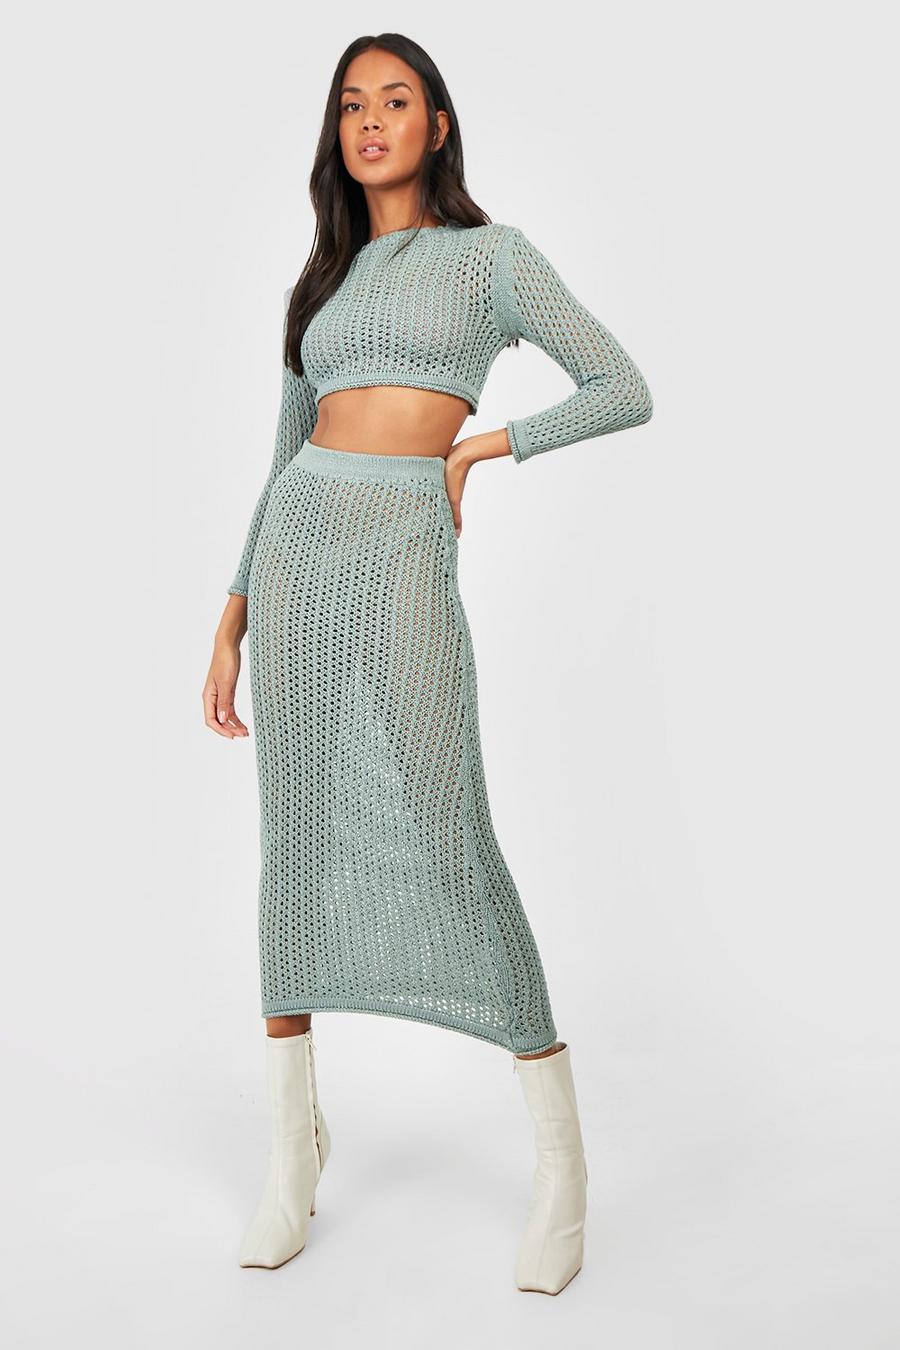 Teal green Crochet Maxi Skirt Co-ord